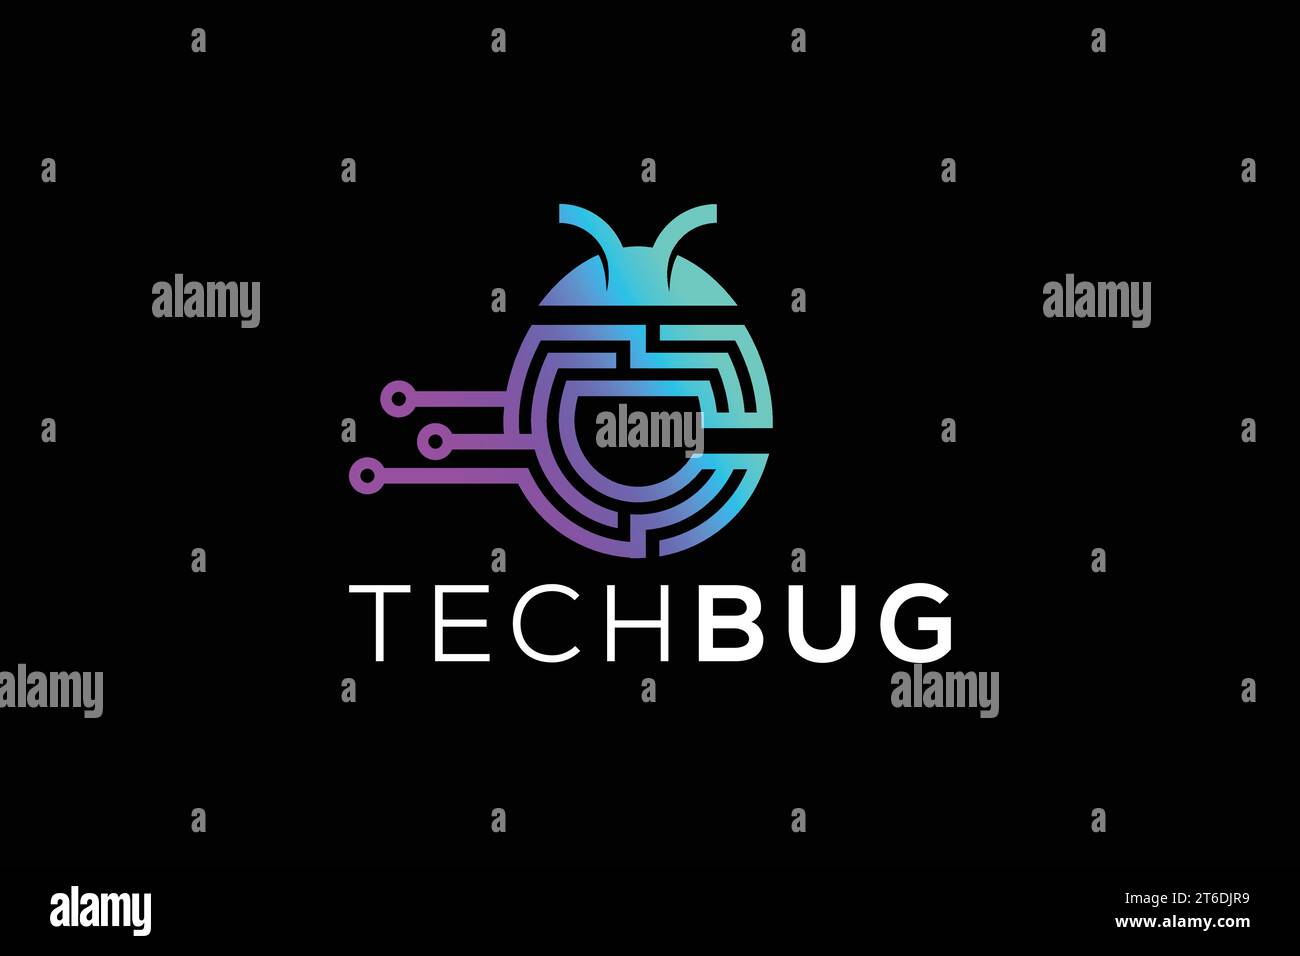 Letter C modern tech bug vector logo design Stock Vector